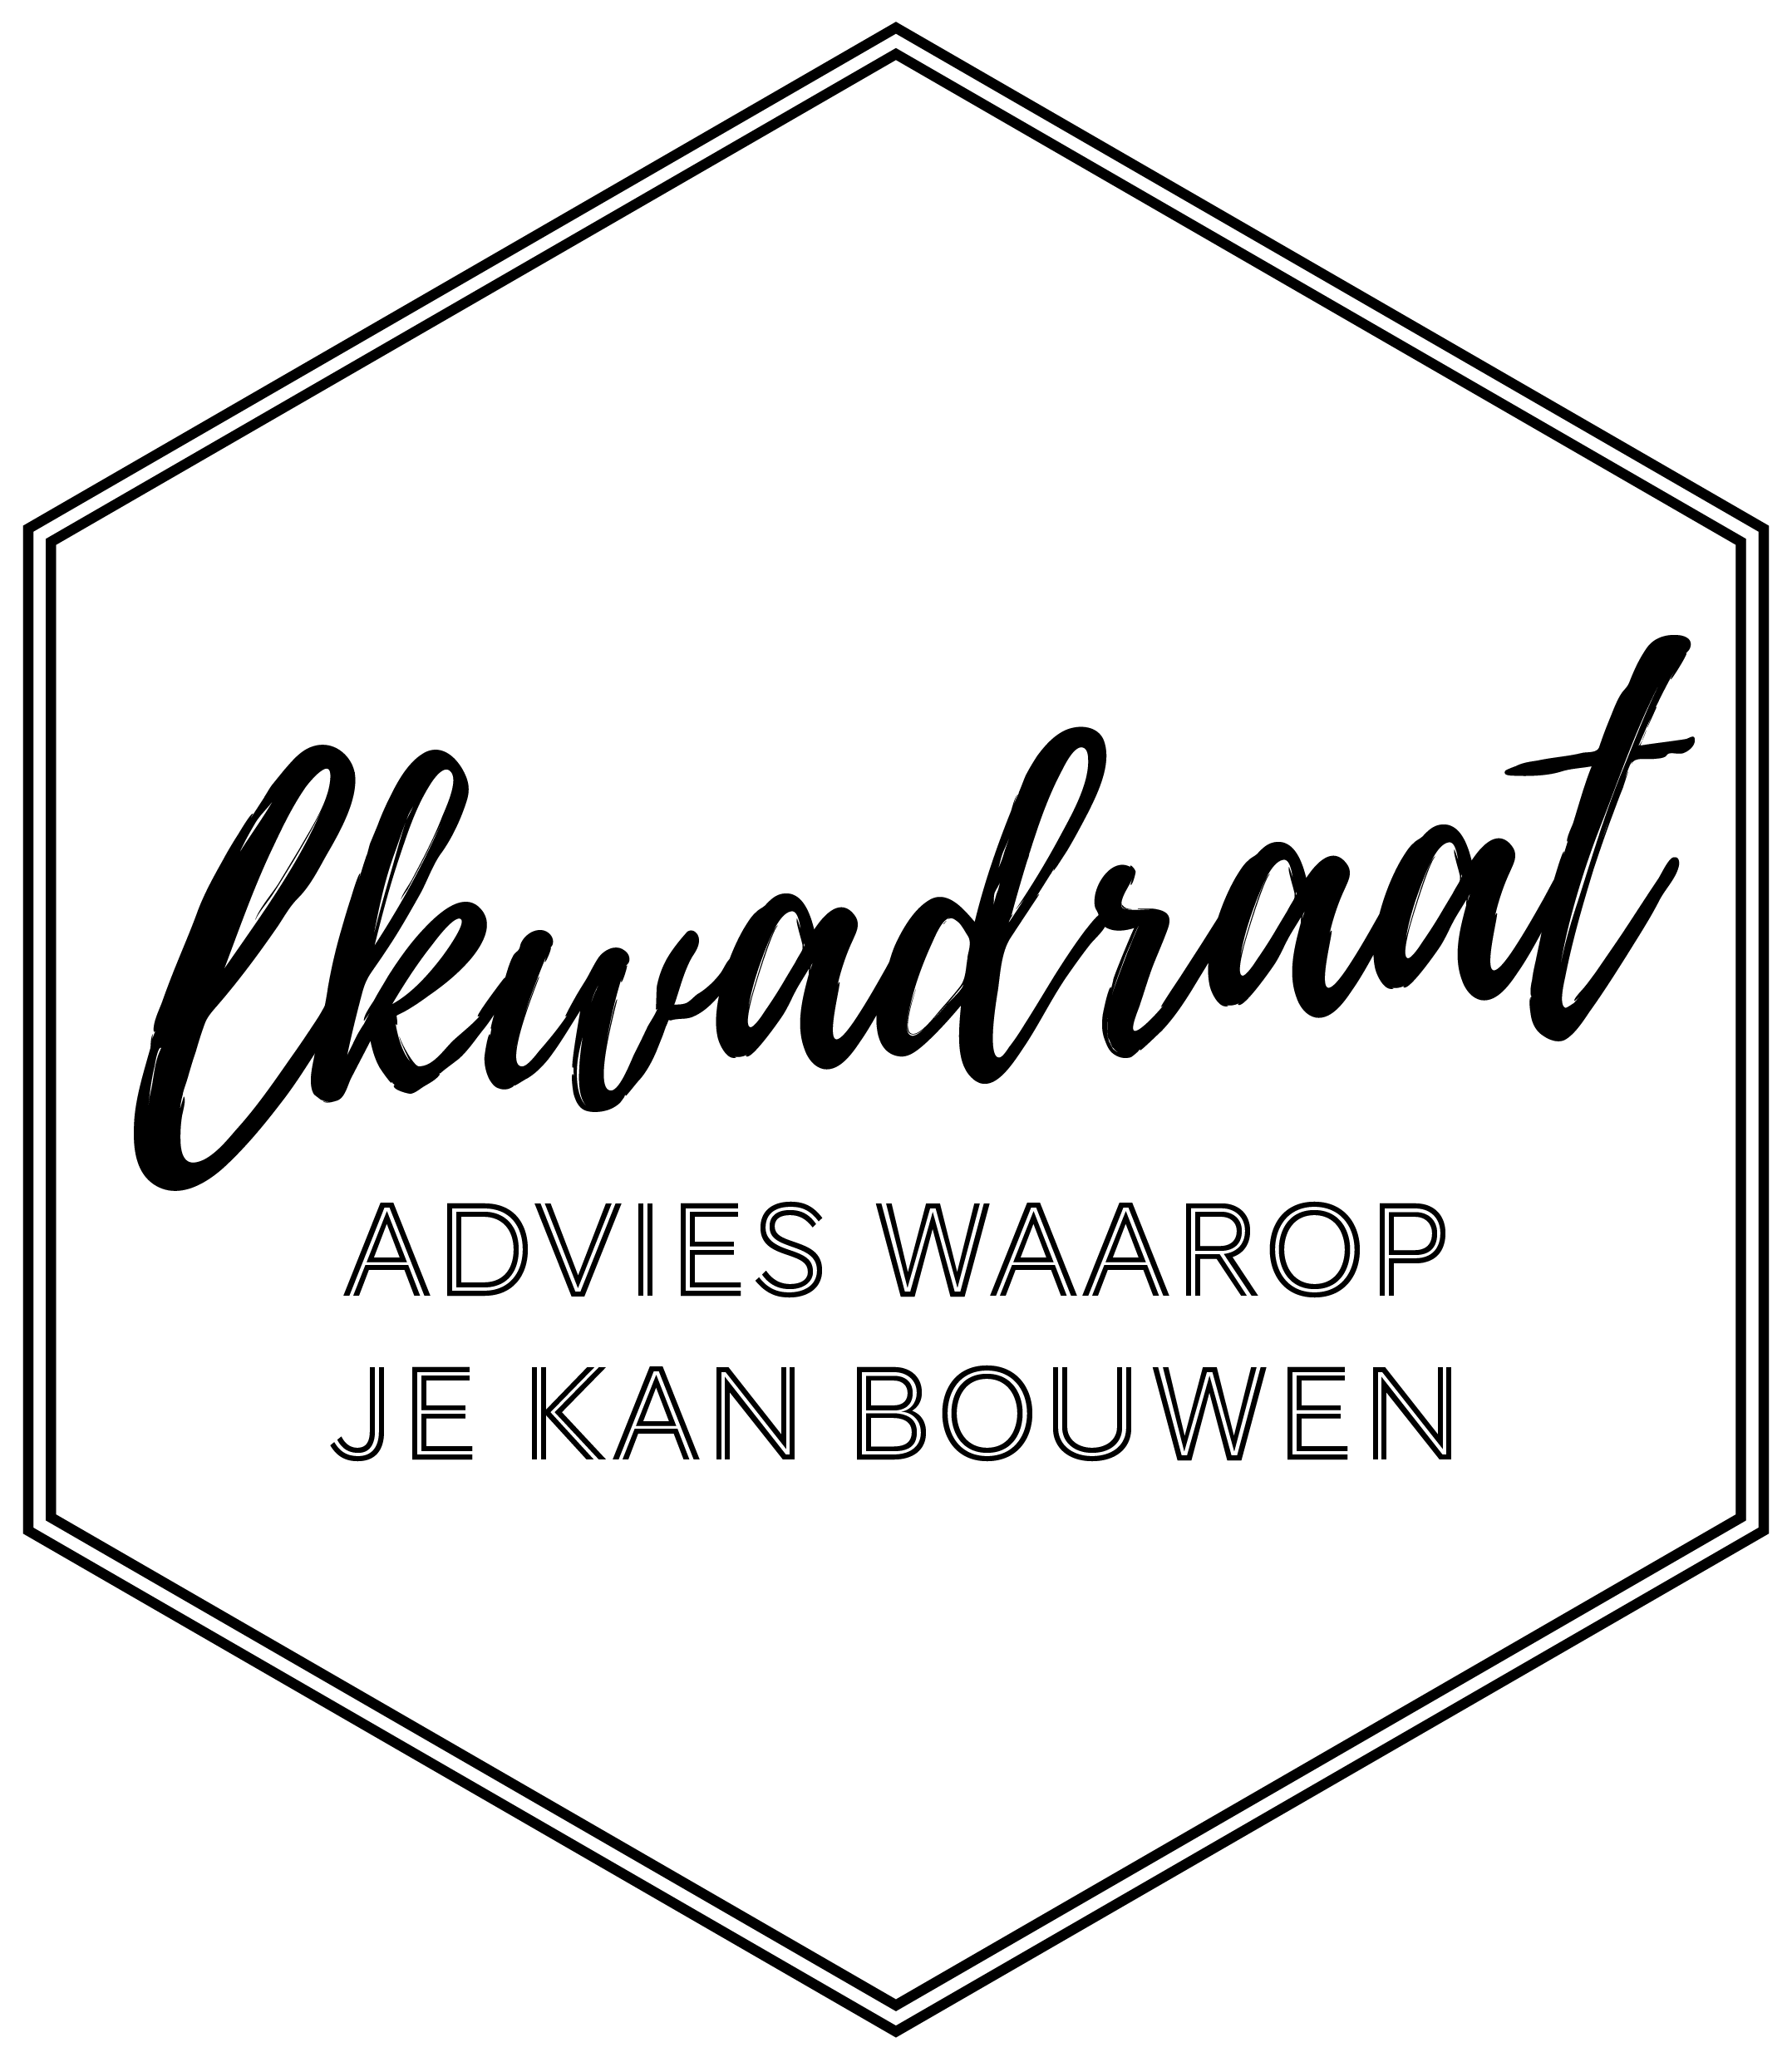 lkwadraat logo